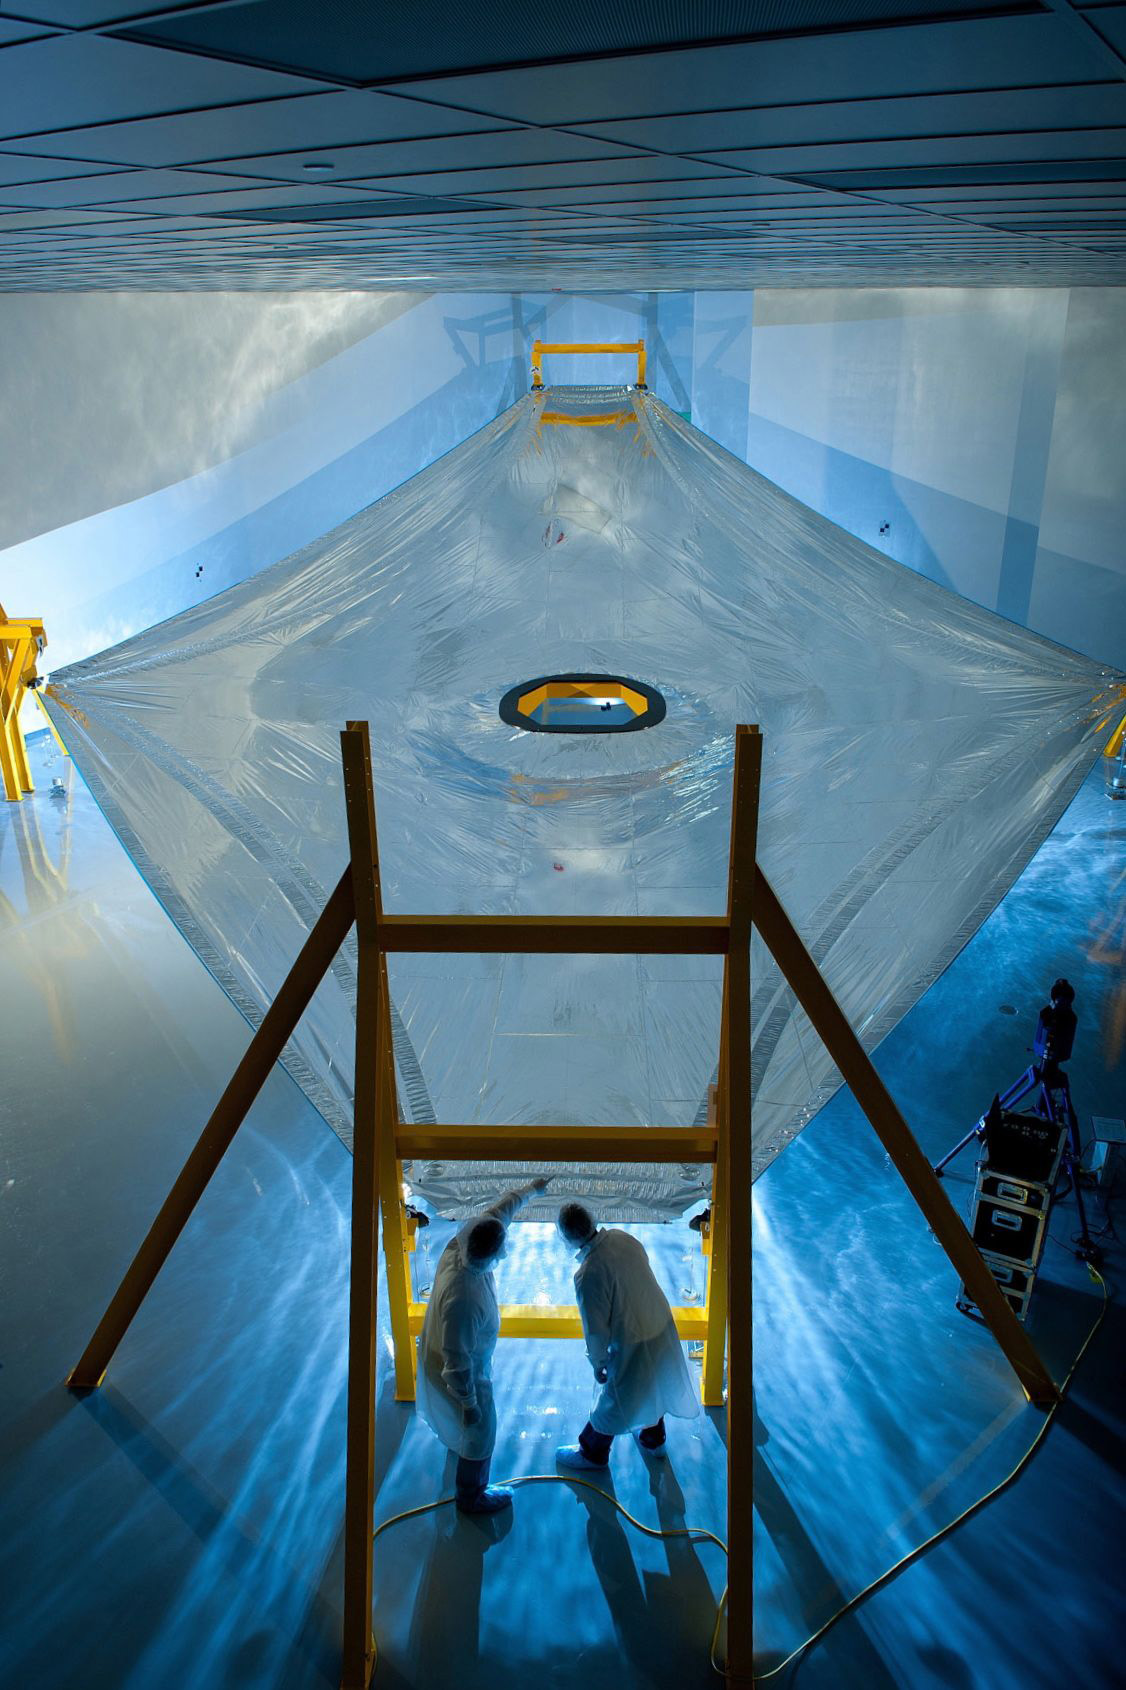 One full-scale Webb telescope sunshield membrane deployed on the membrane test fixture.